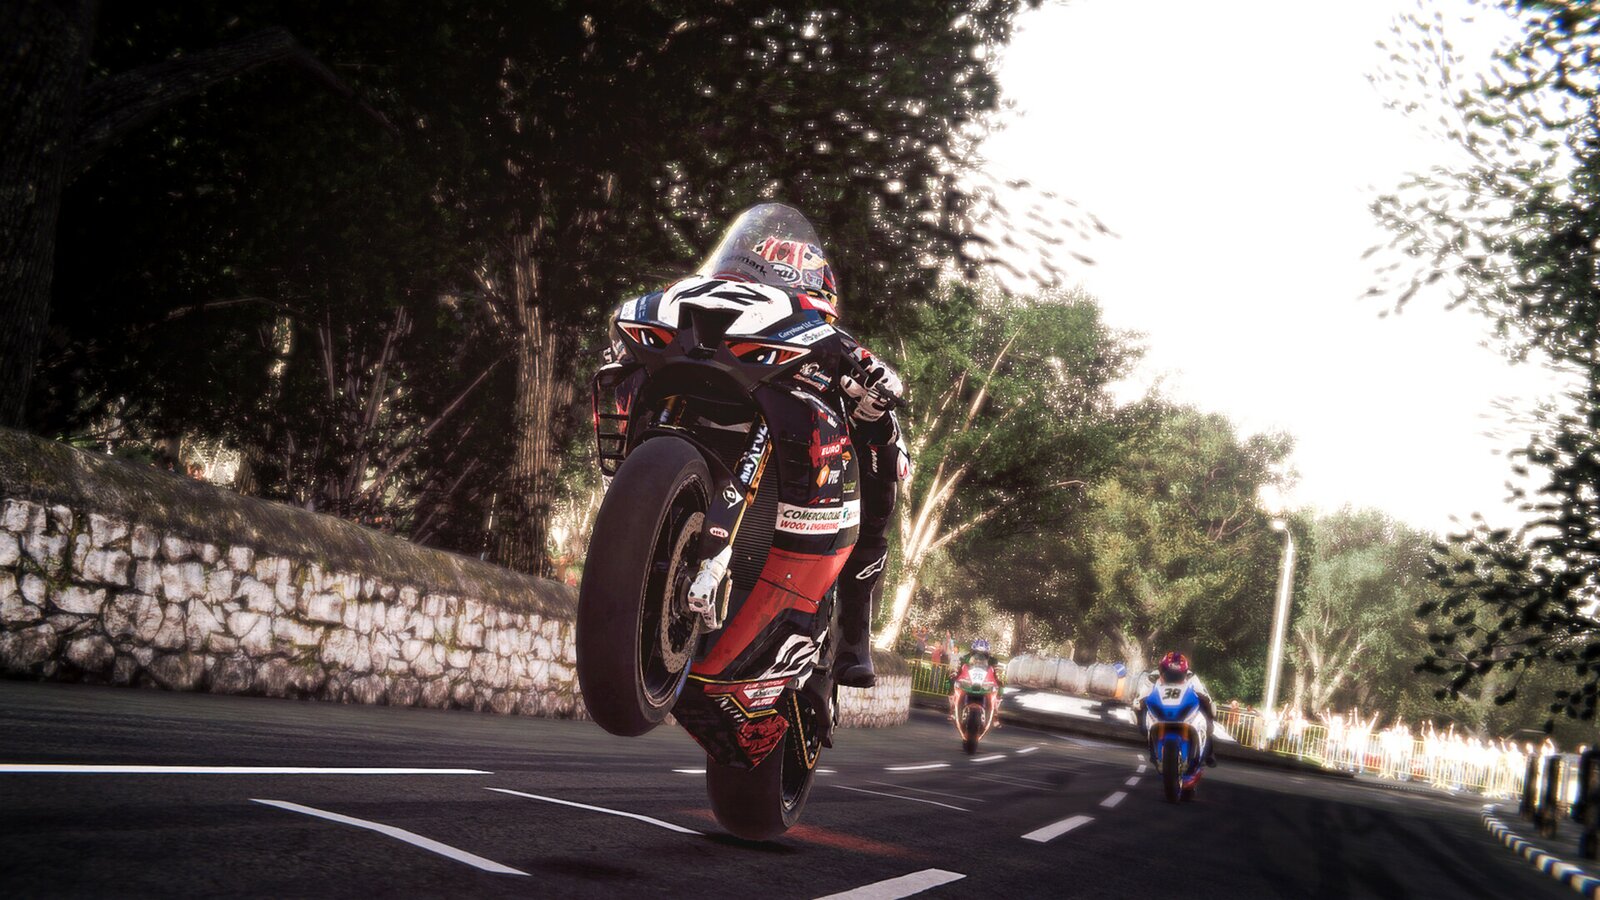 TT Isle Of Man: Ride on the Edge 3 - Racing Fan Edition